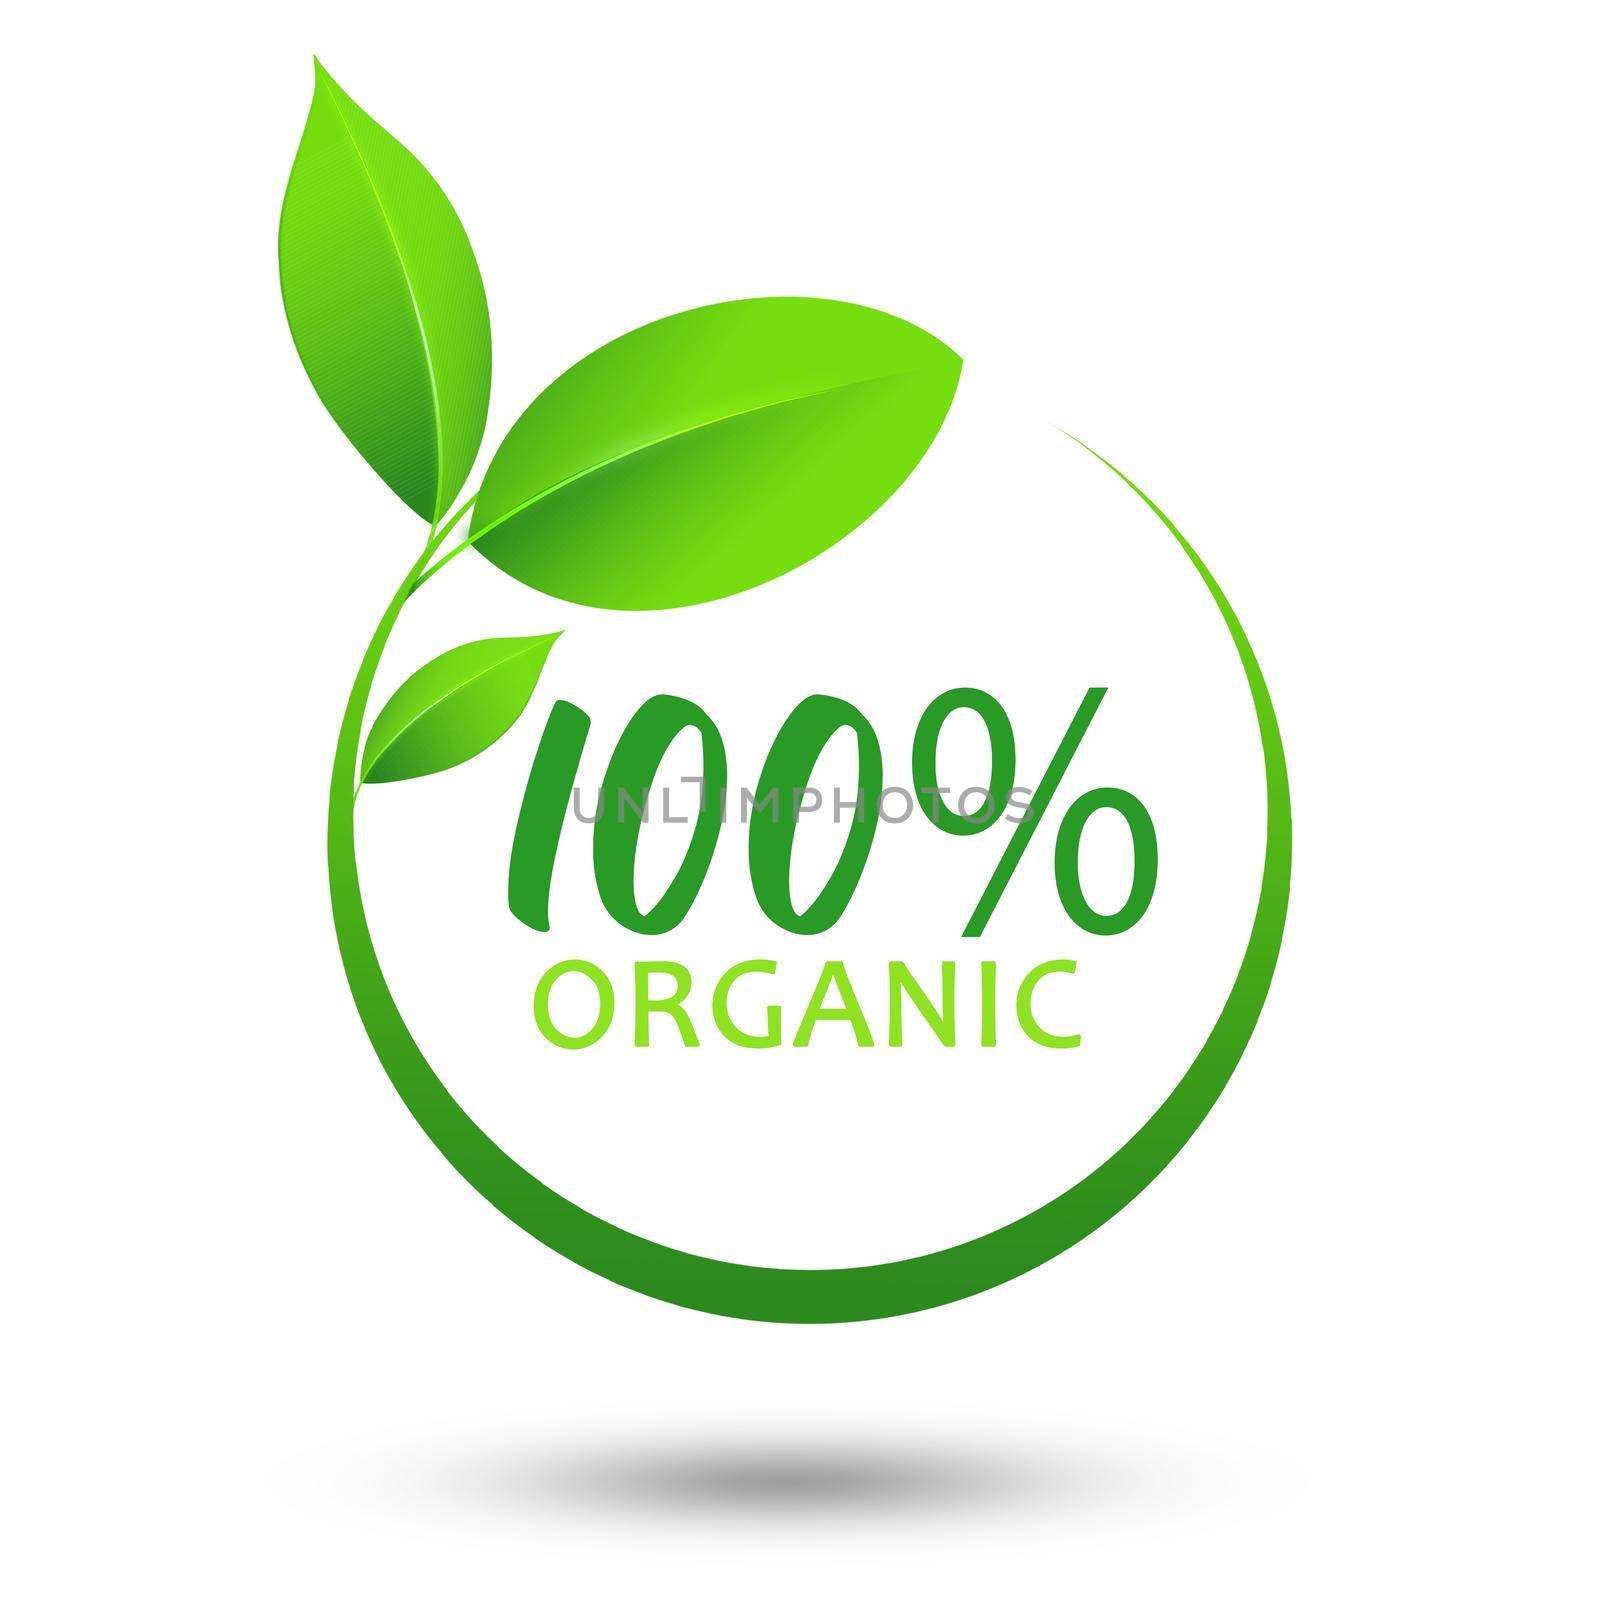 100% organic logo design isolated on white background.illustration by thanumporn